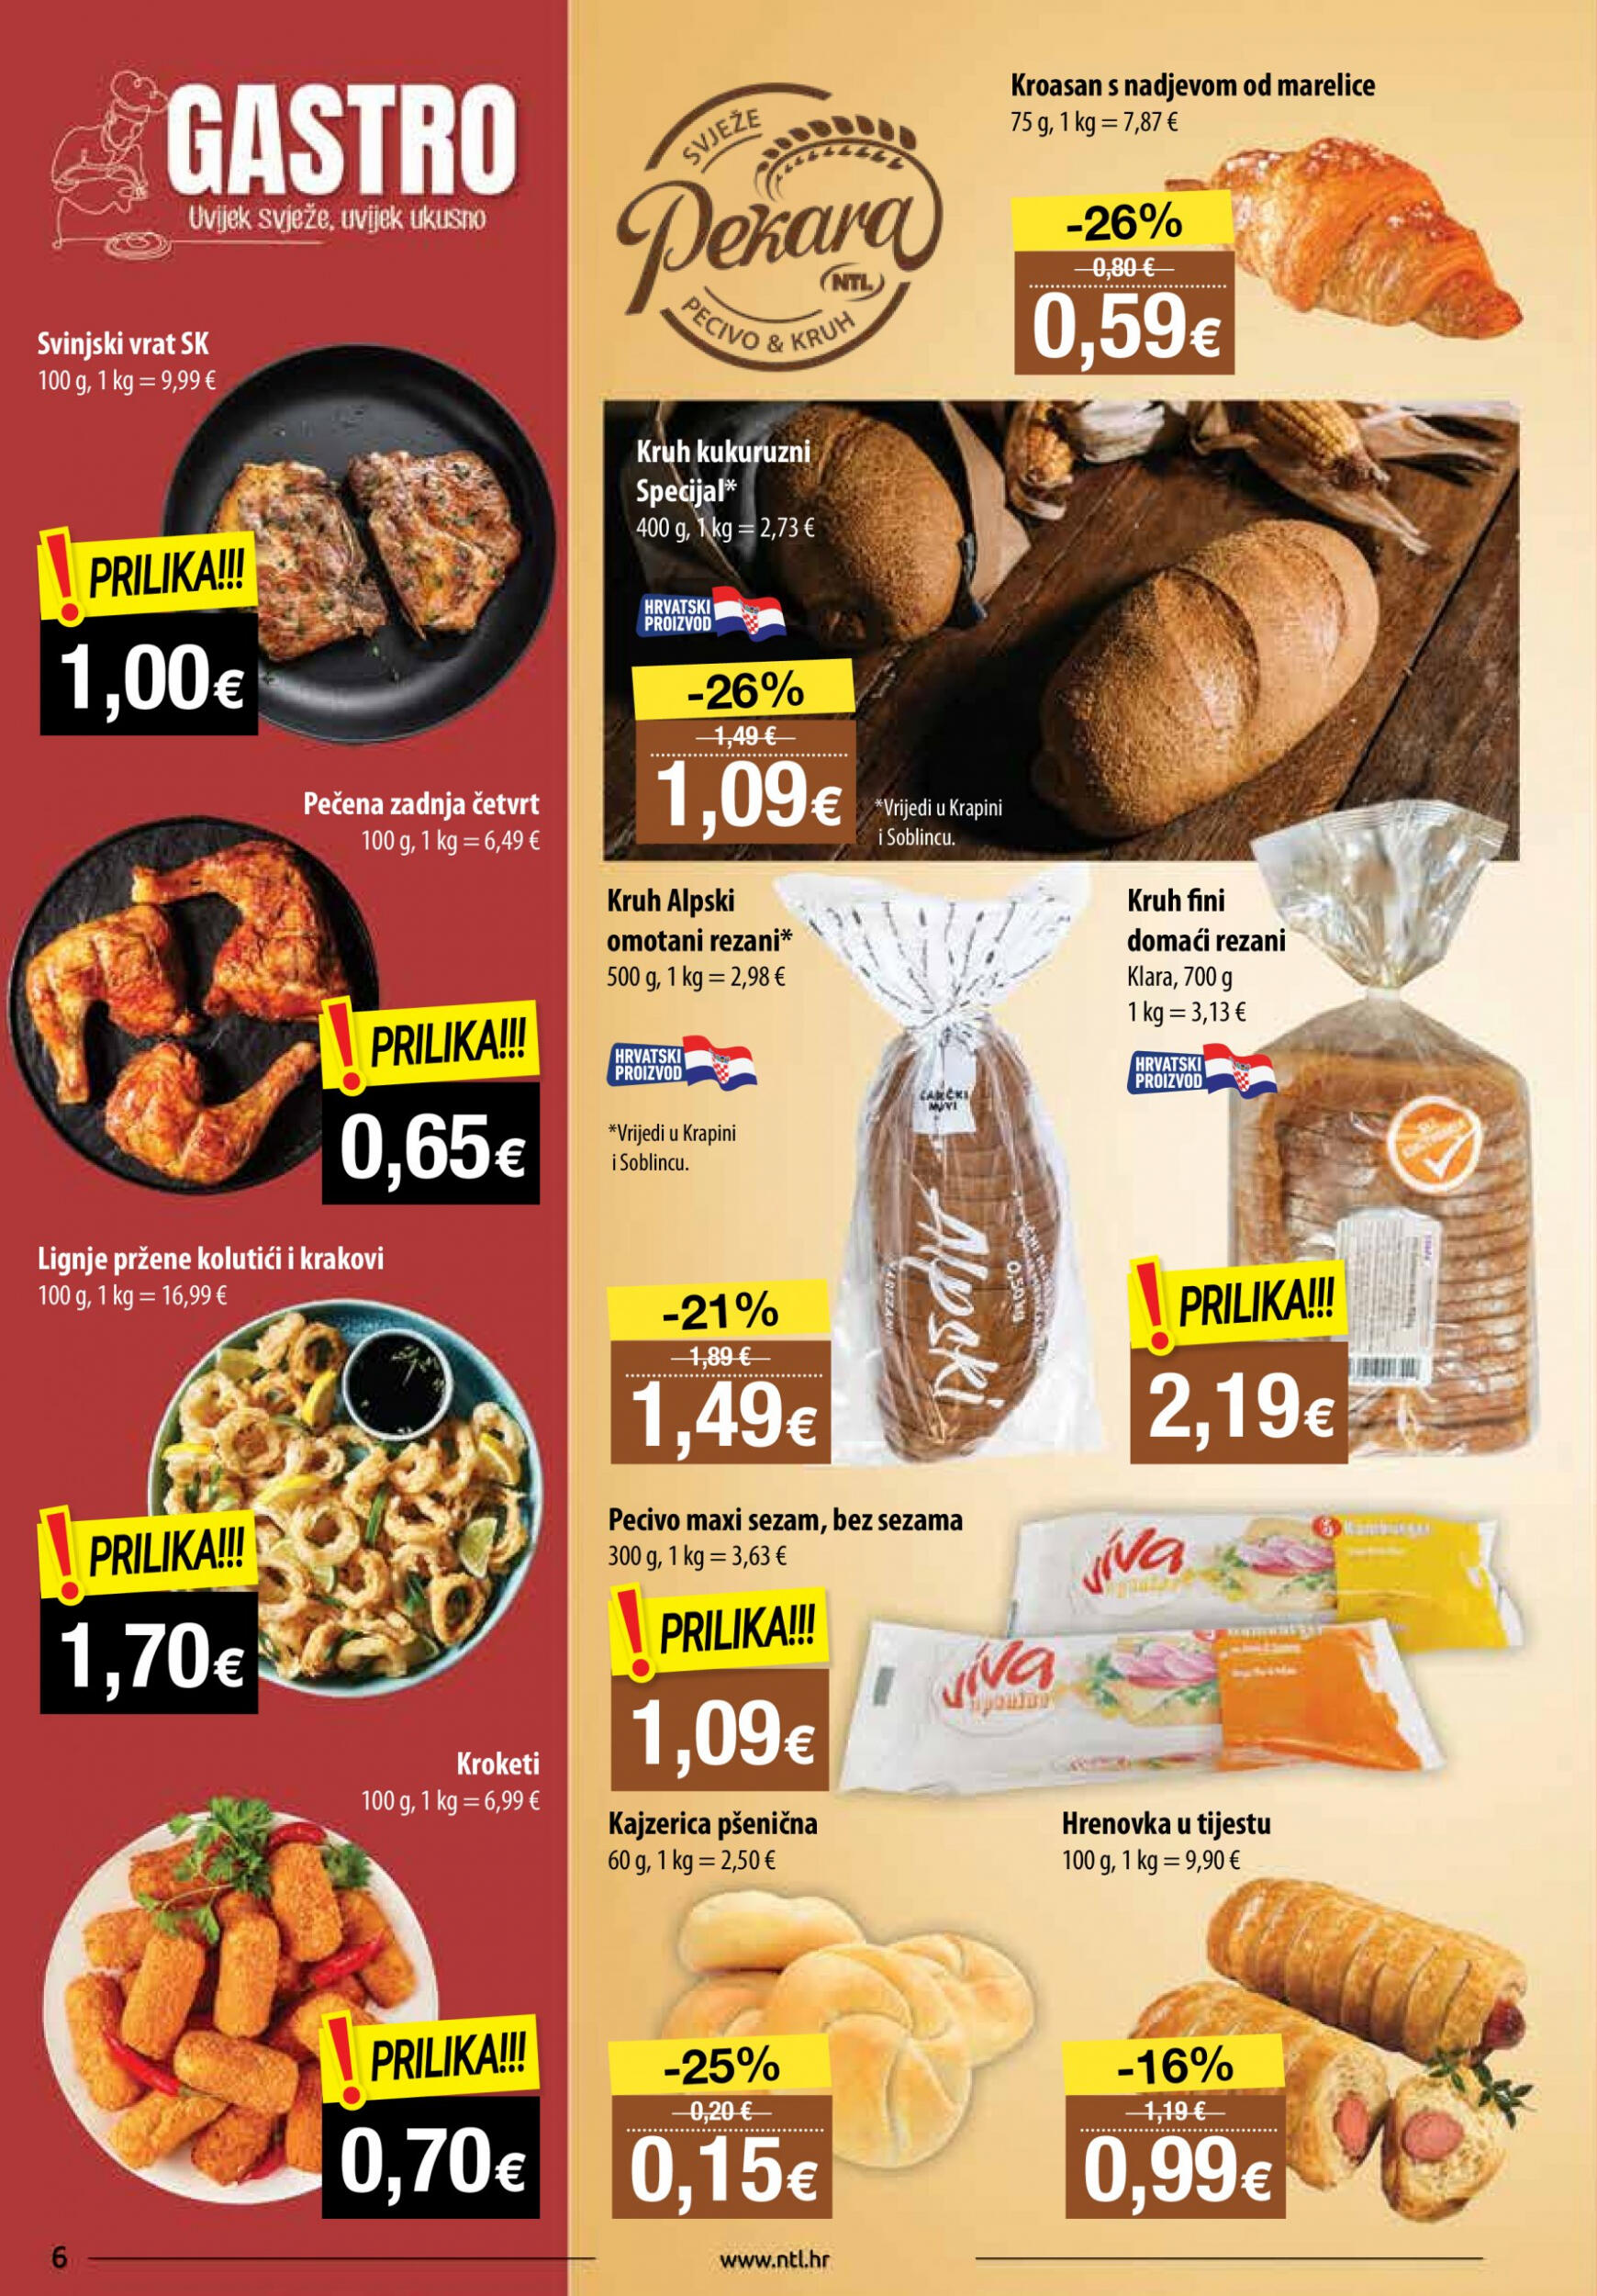 ntl - Novi katalog NTL - Supermarketi Soblinec, Krapina, Duga Resa 10.04. - 16.04. - page: 6